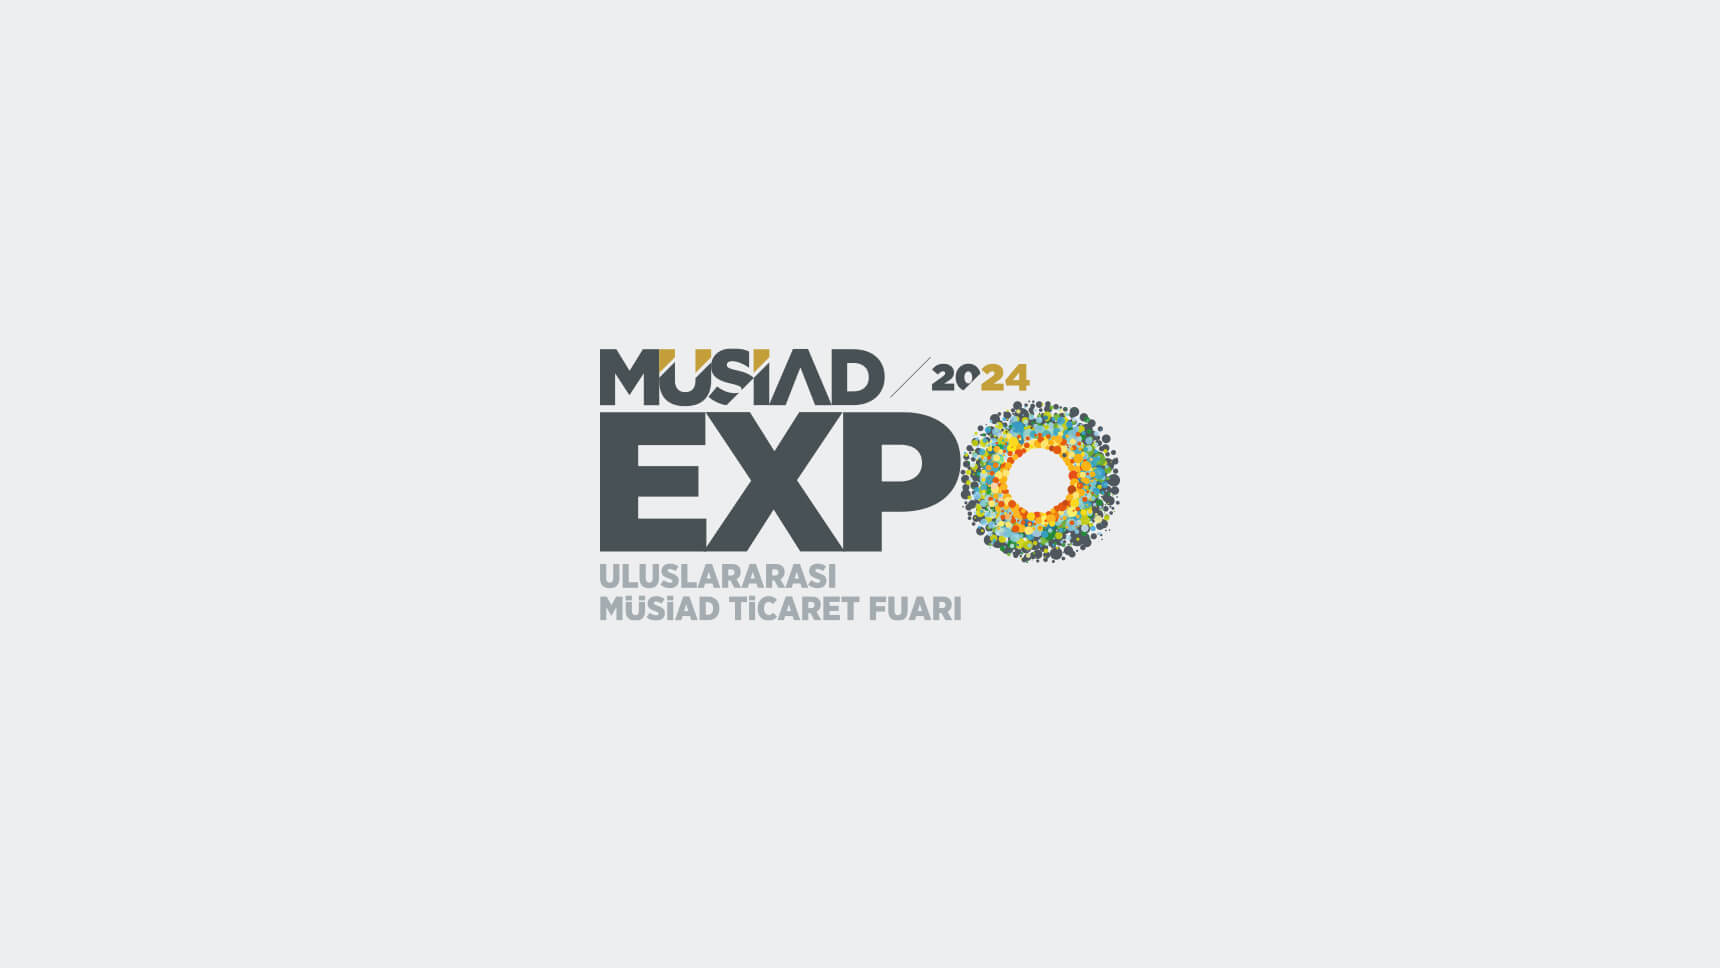 MÜSİAD EXPO-metin 1-5- logo-part-6- logo